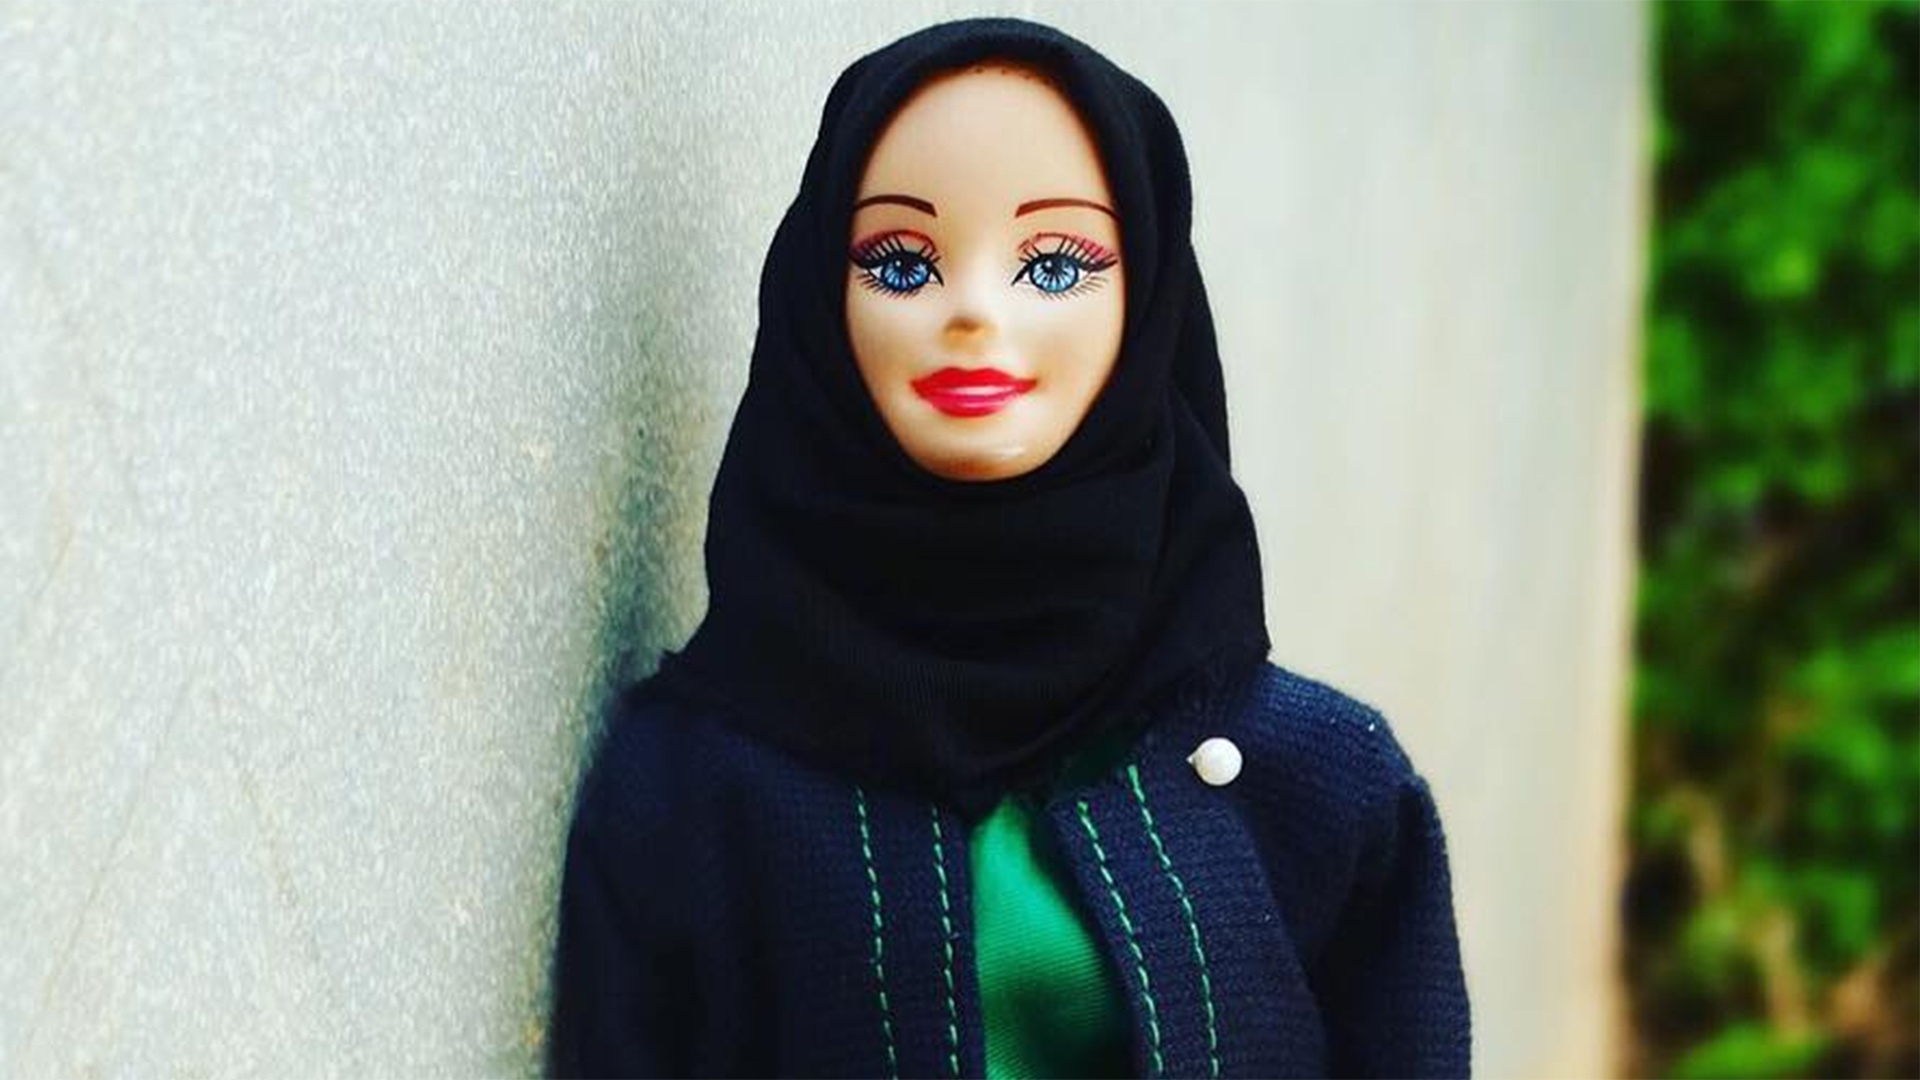 Hijarbie, Barbie musulmana